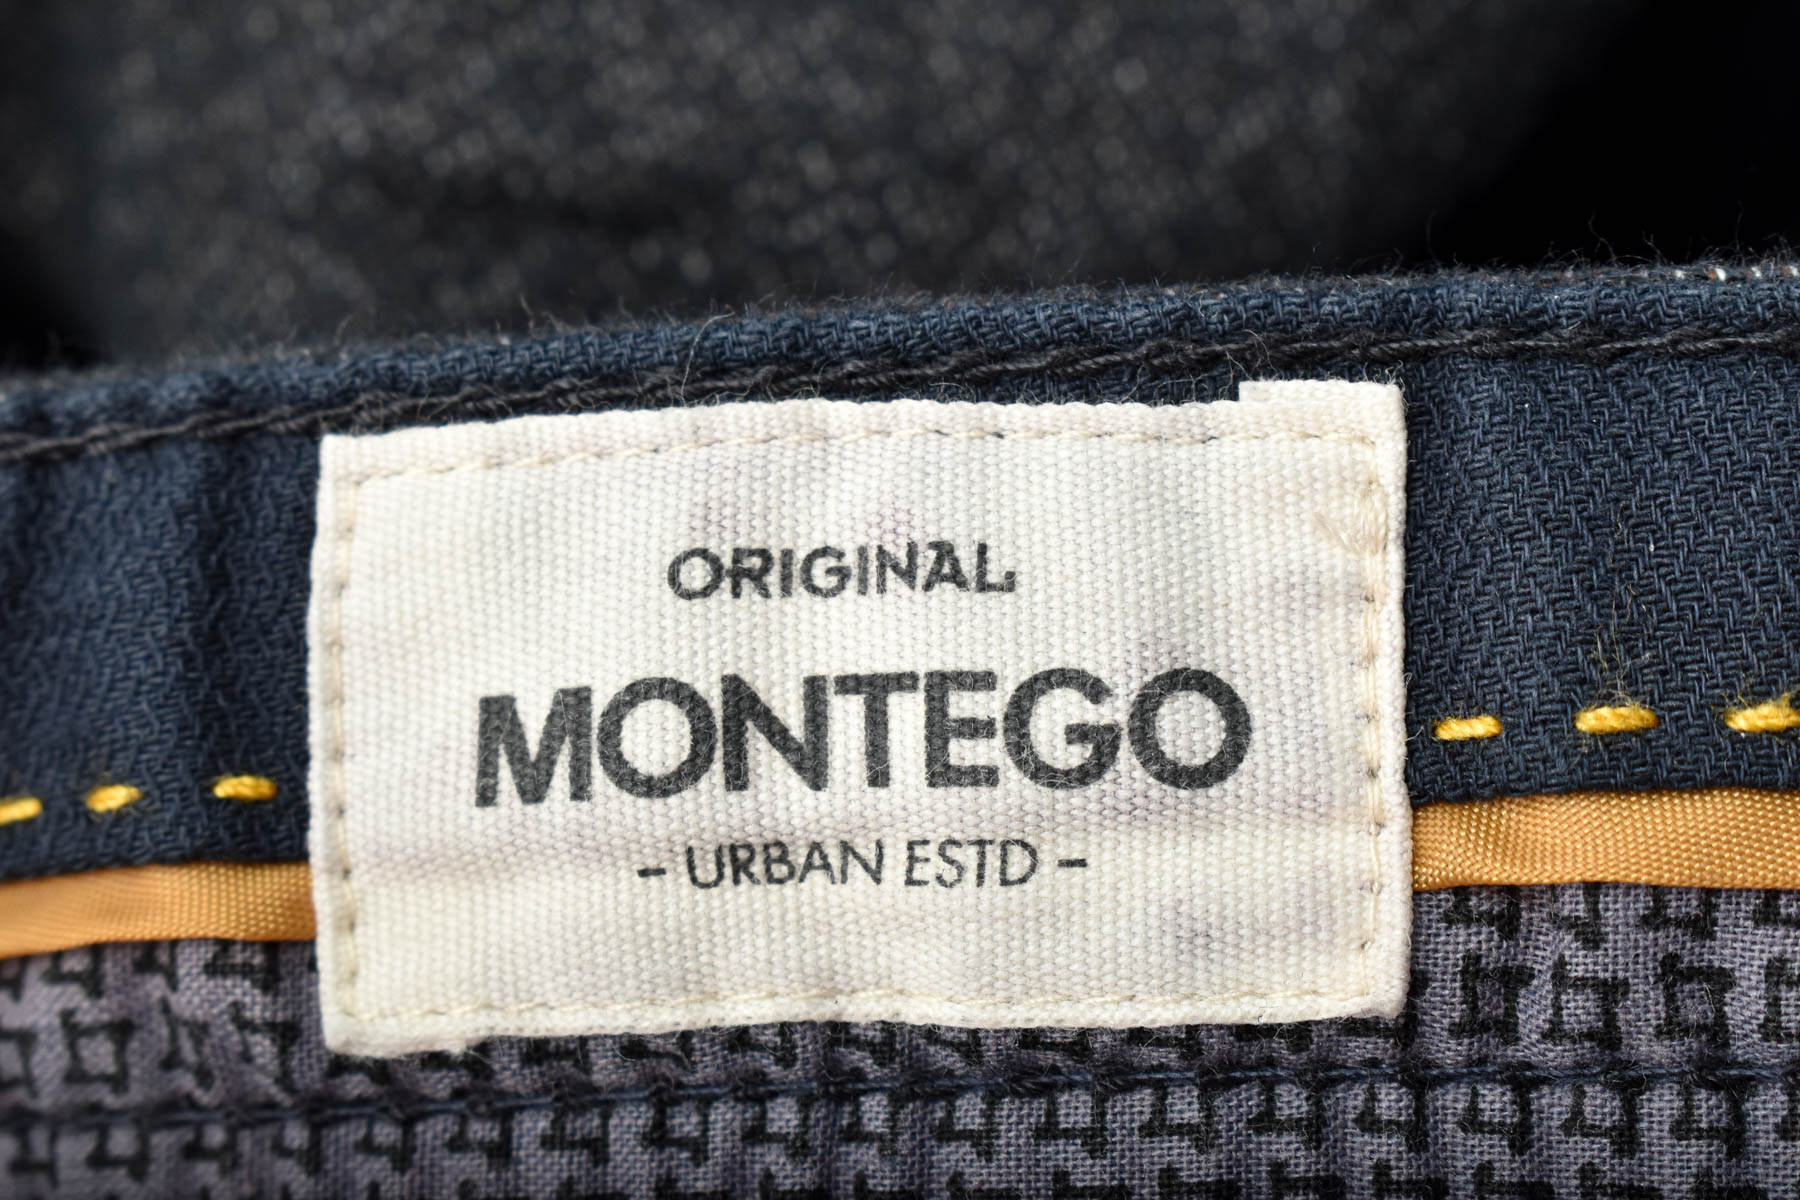 Men's trousers - MONTEGO - 2